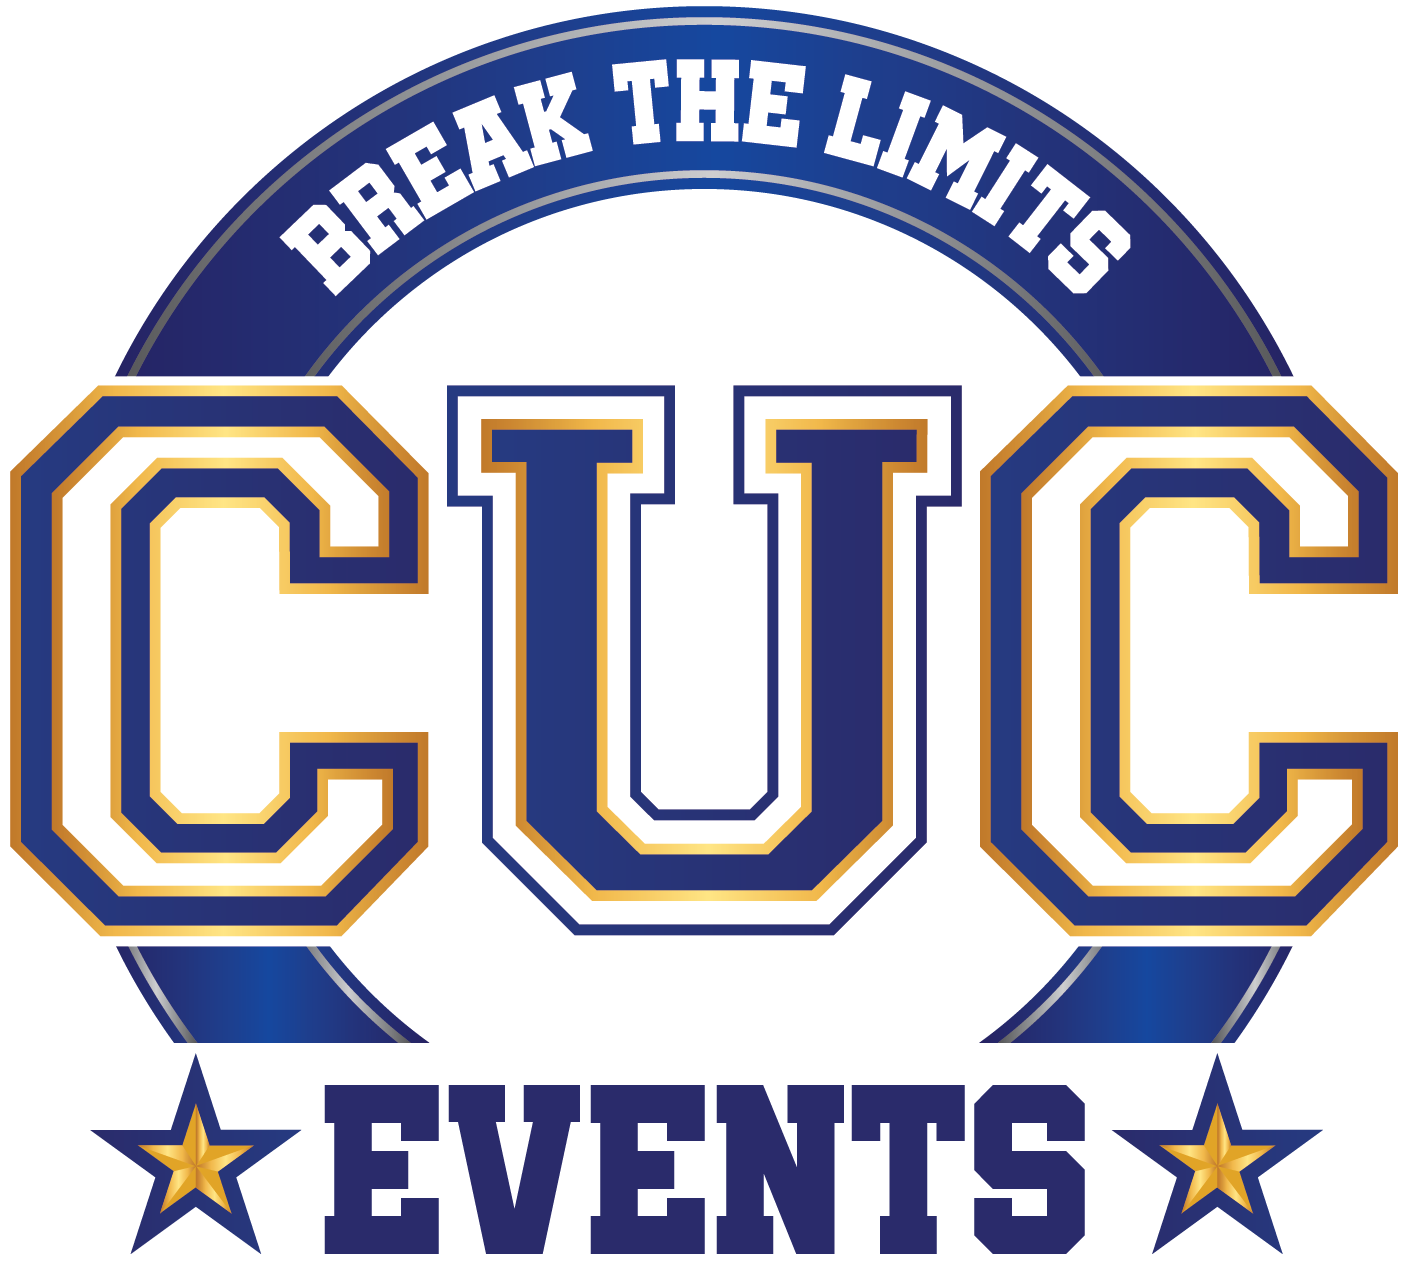 CUC EVENTS